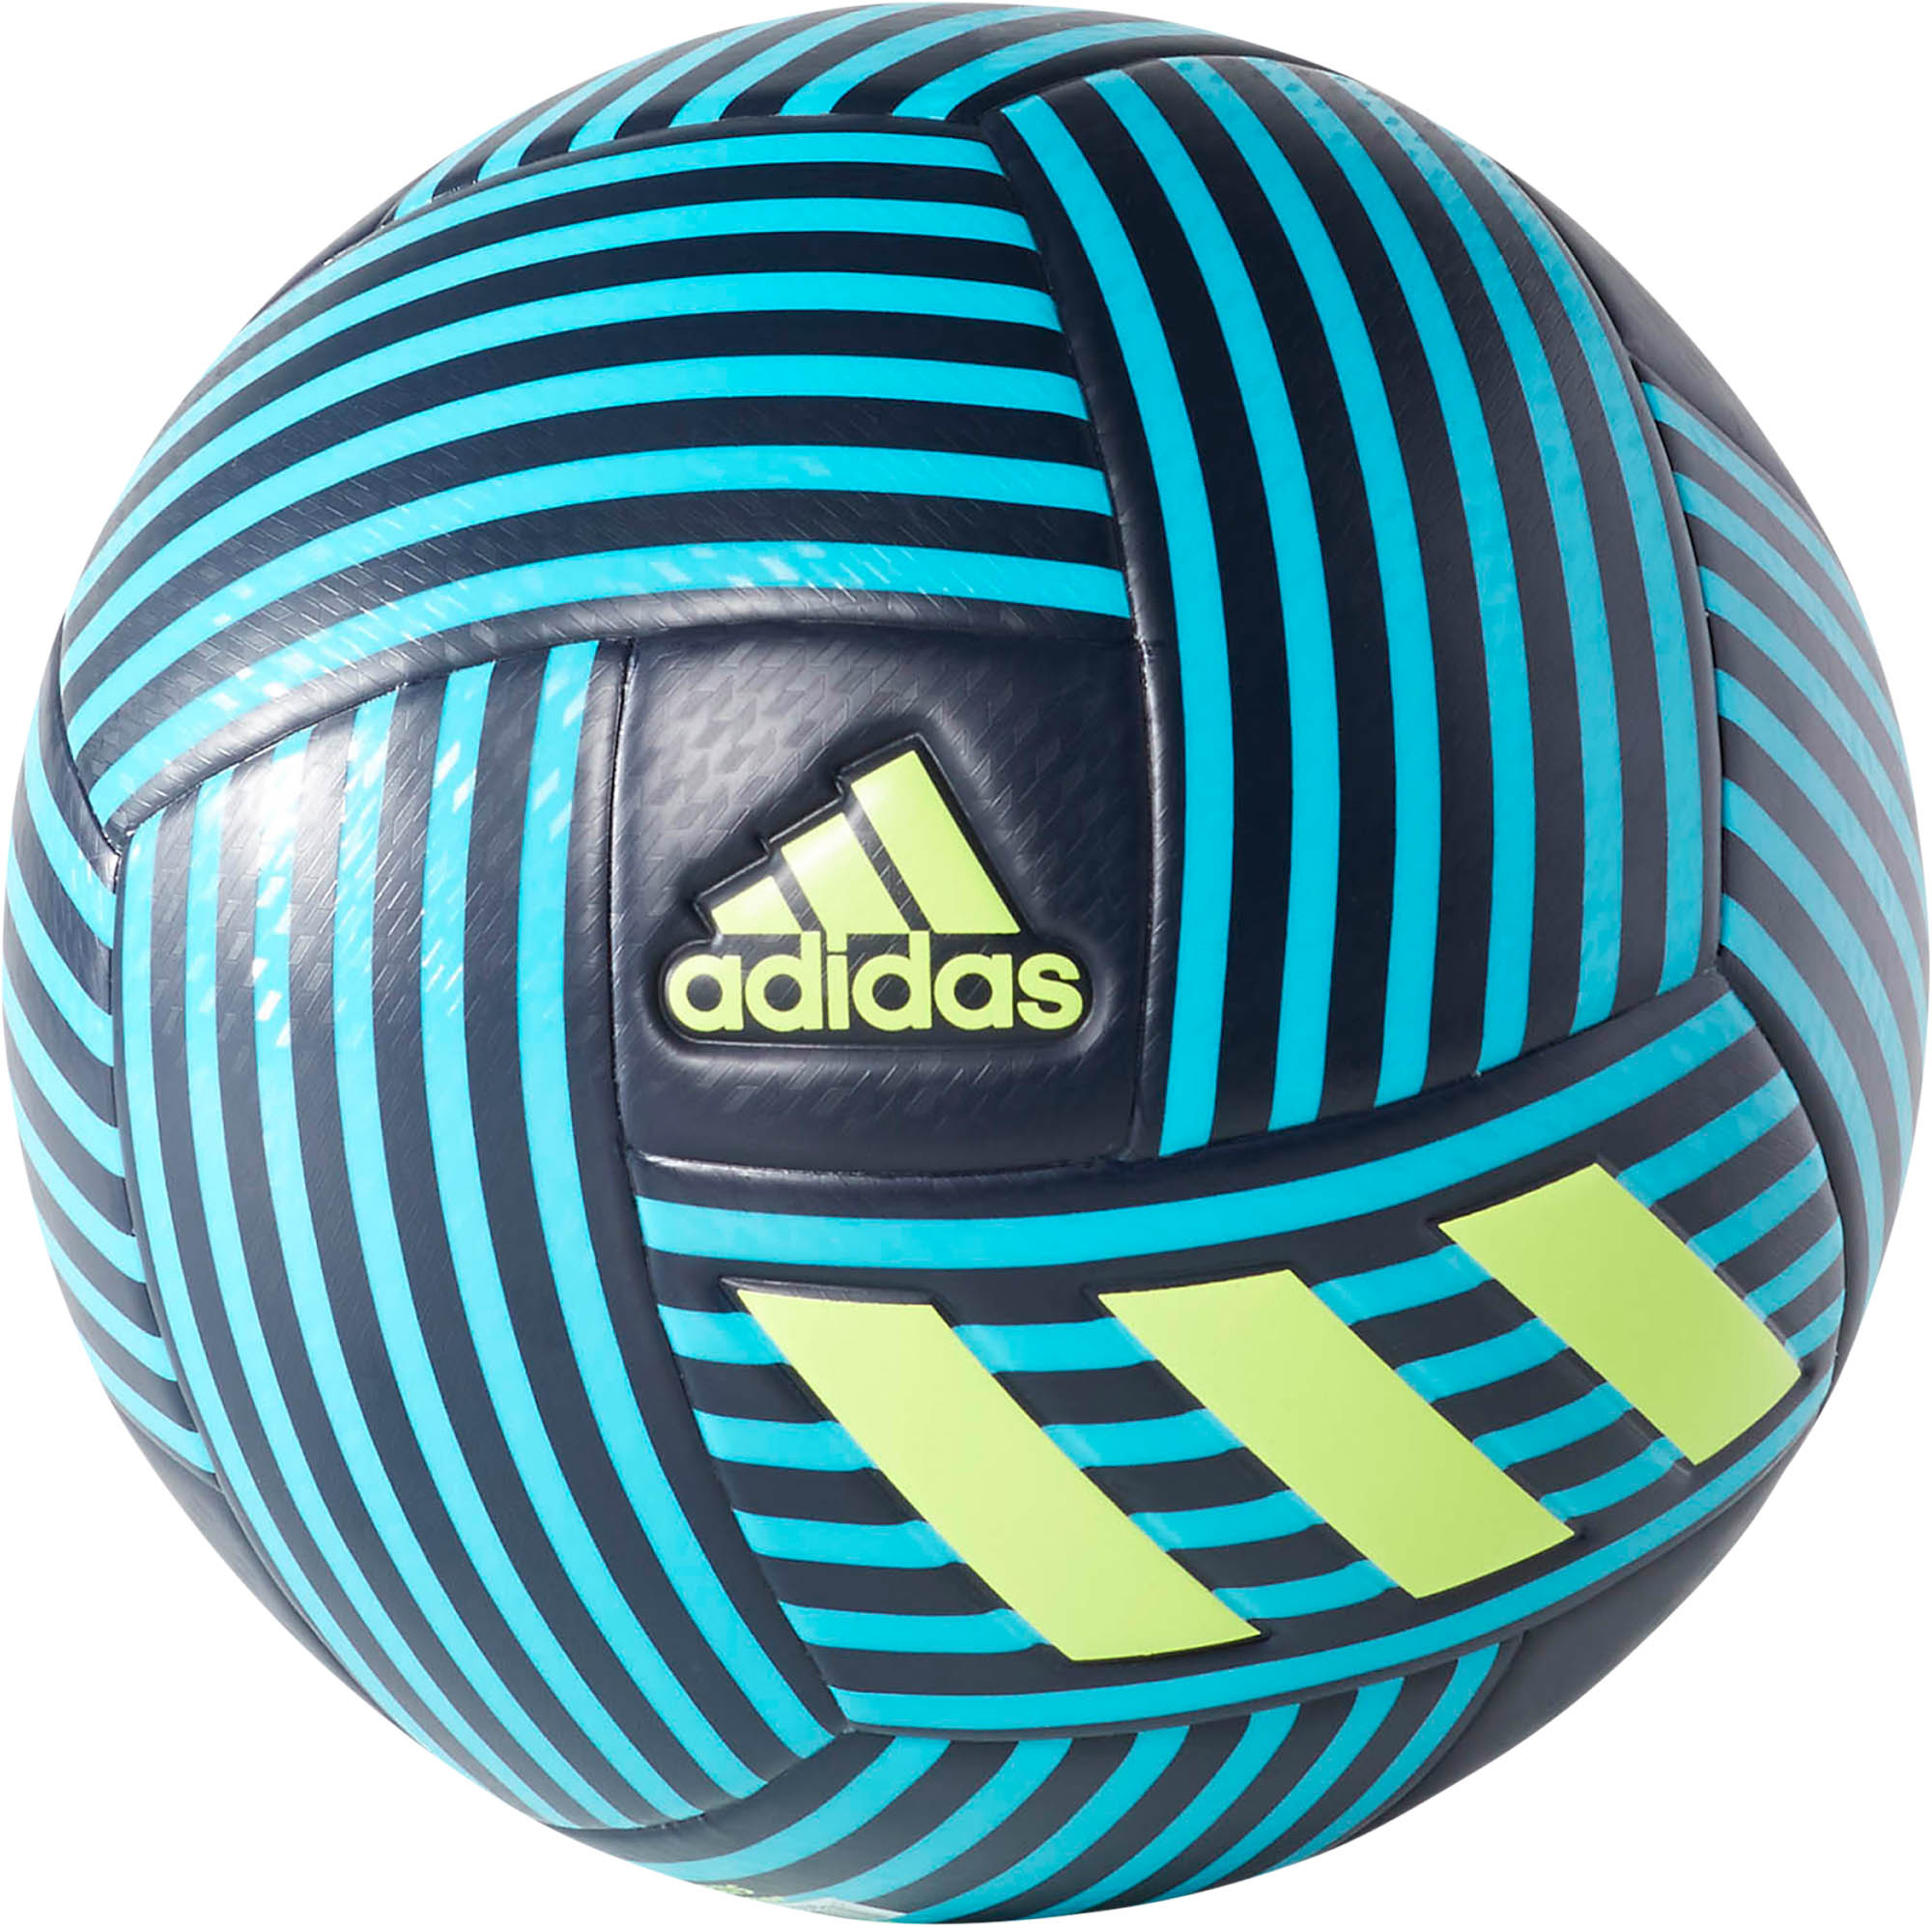 adidas Nemeziz Soccer Ball - Black 